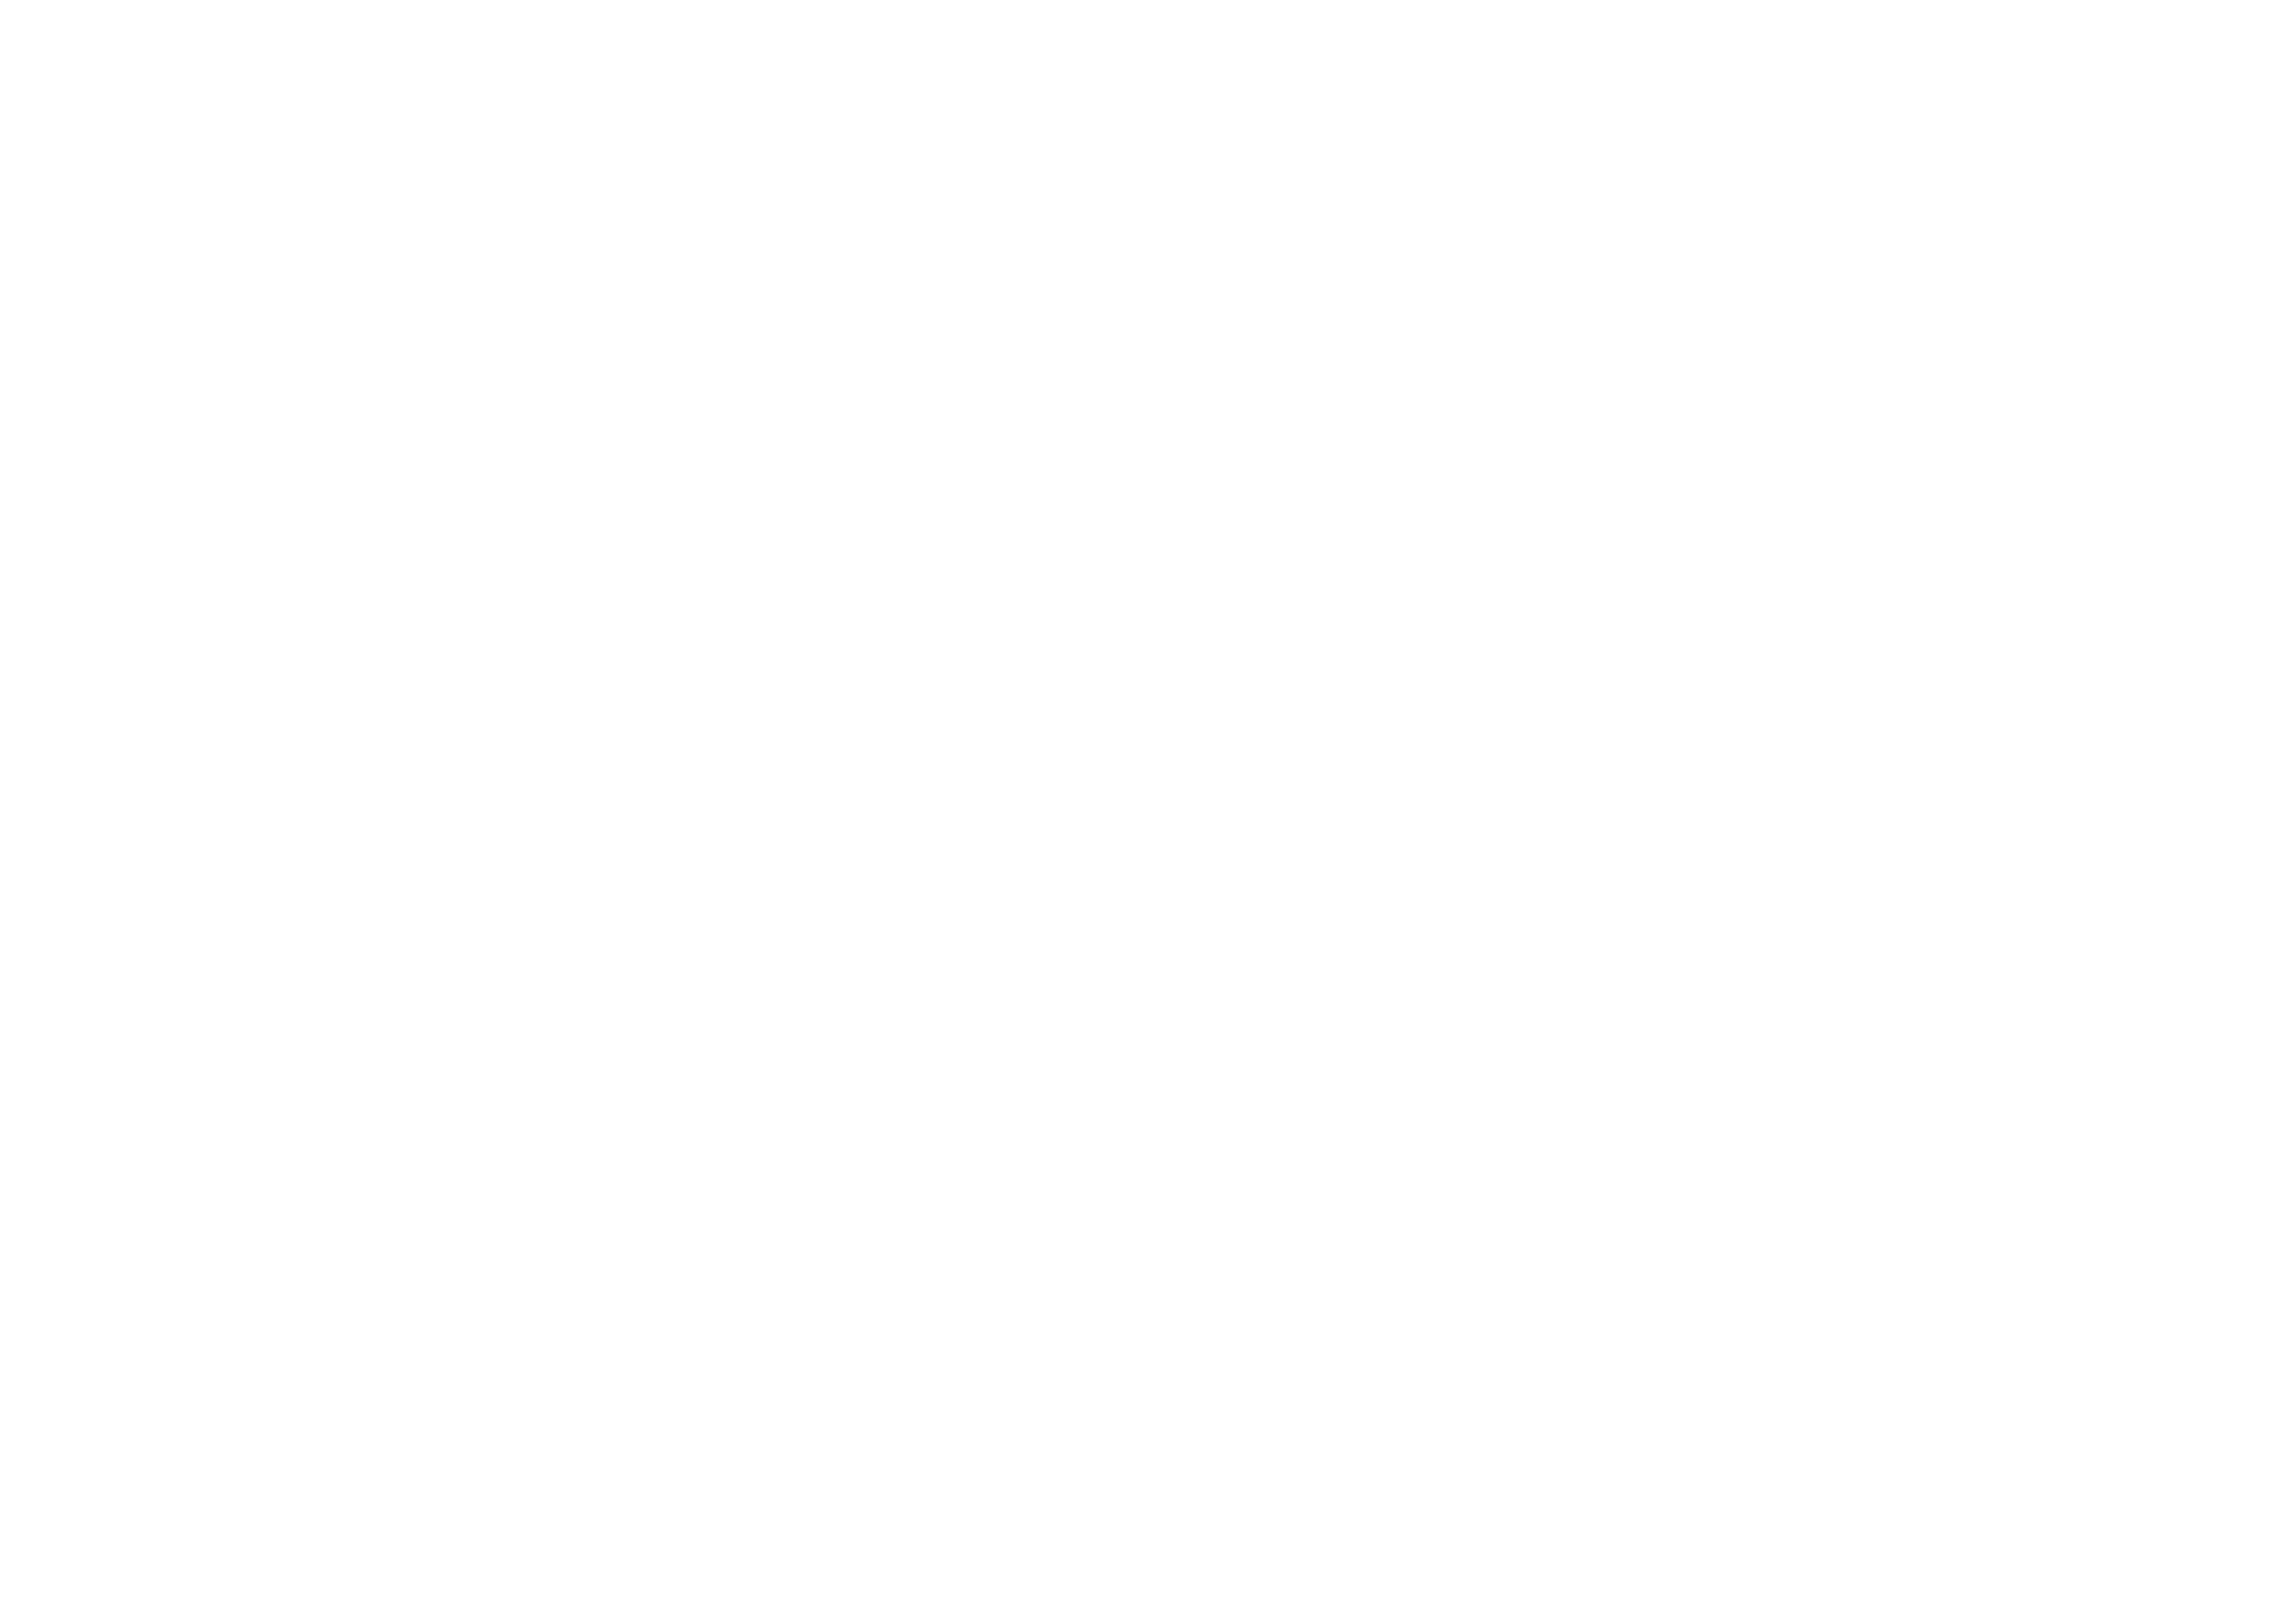 nighfestival logo